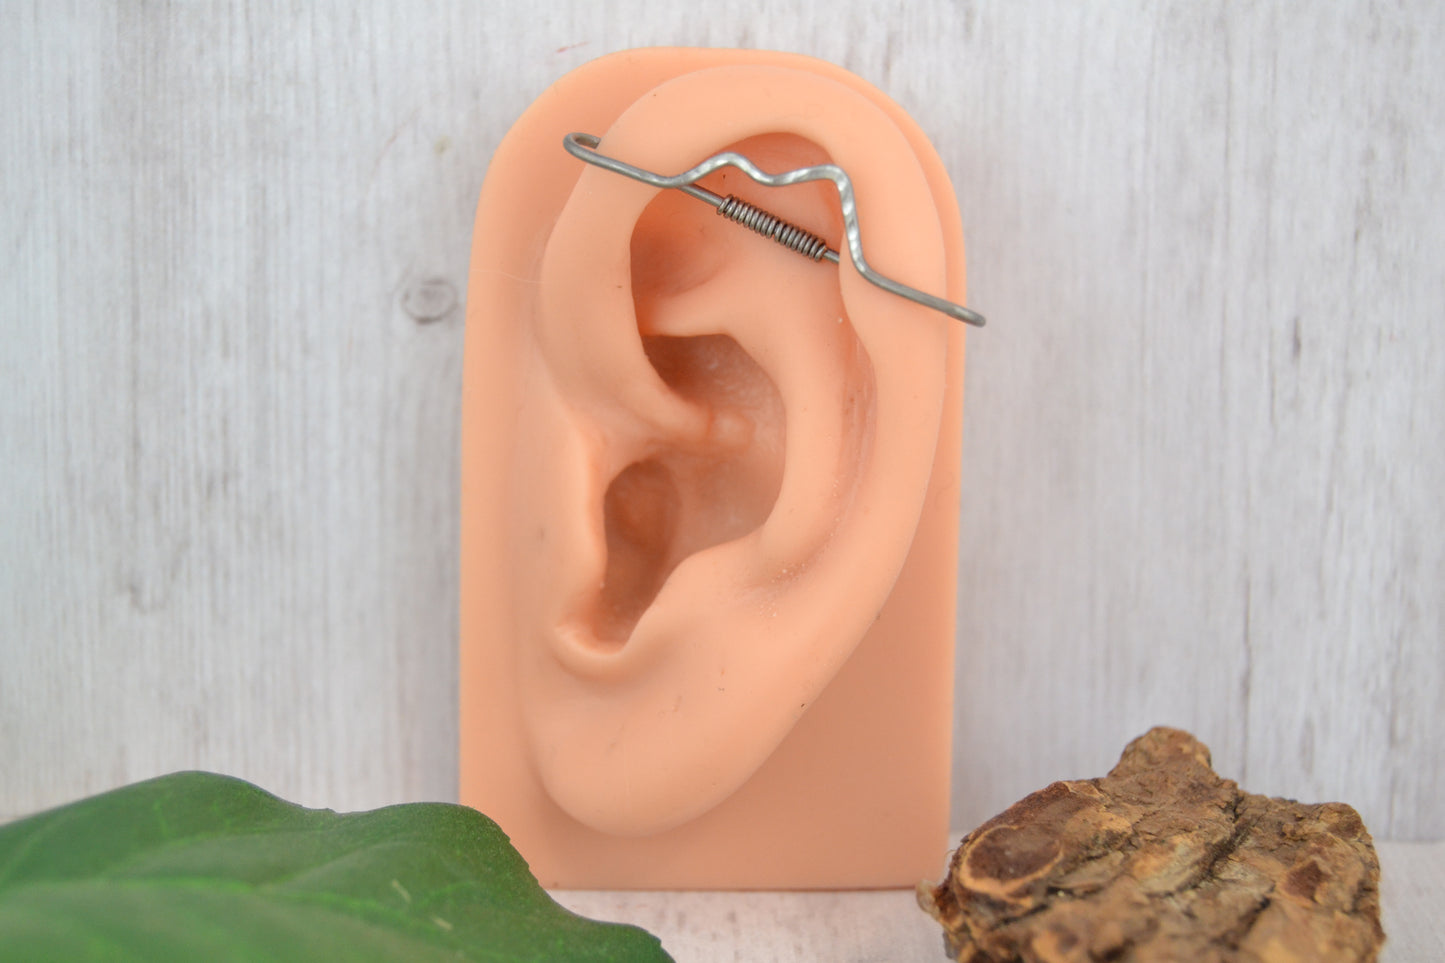 Mountain Platinum Textured Pierced Industrial Ear Bar